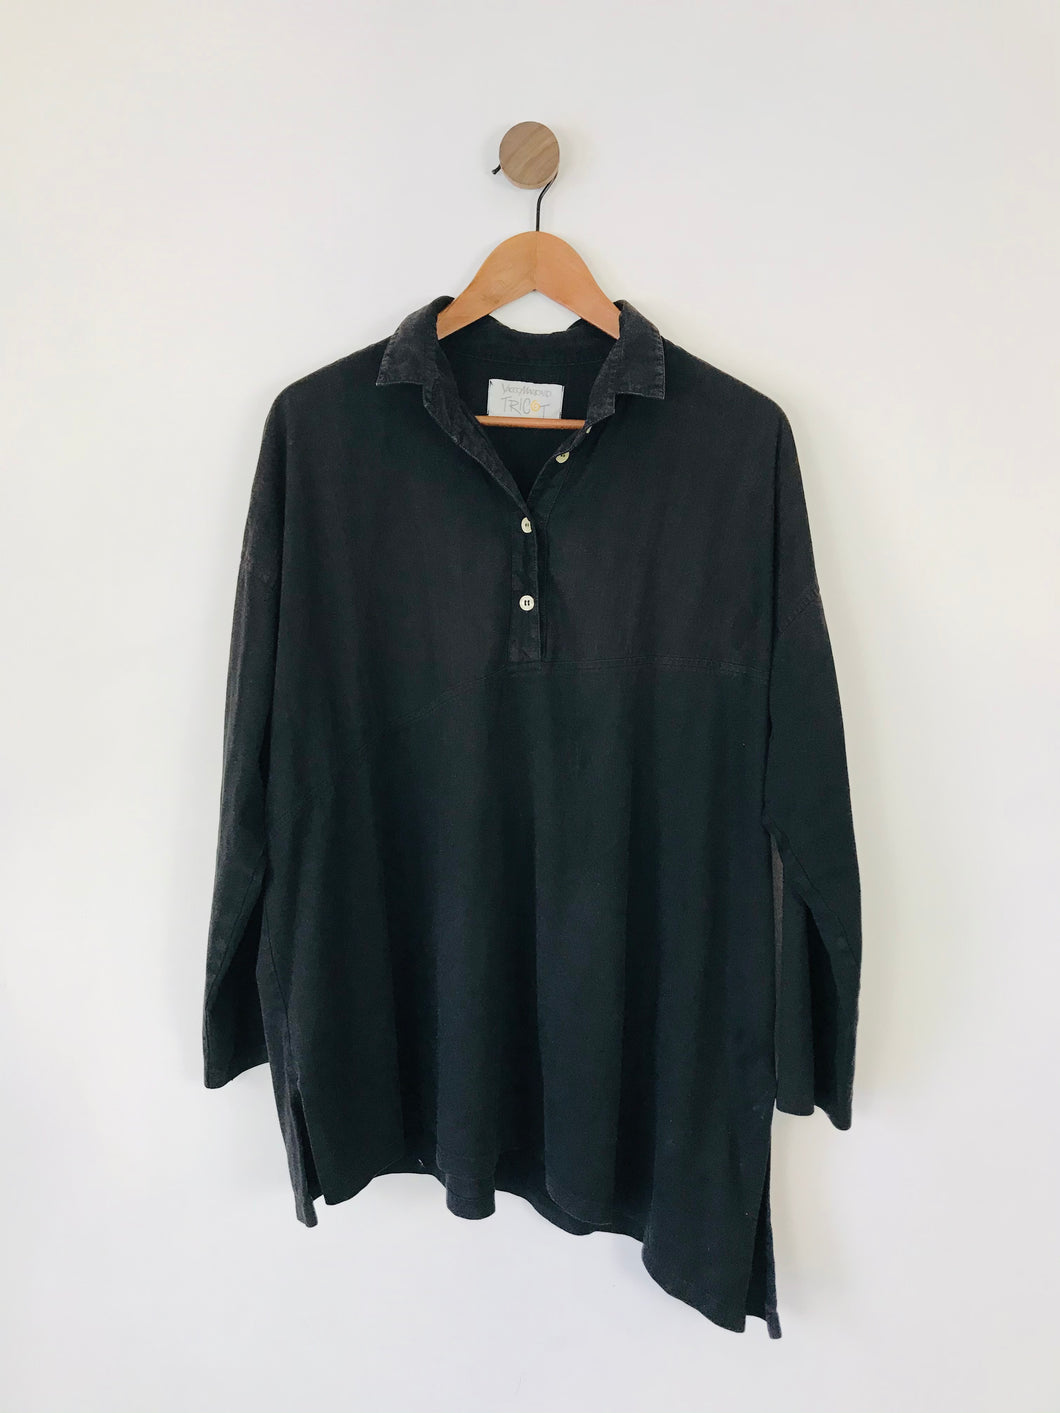 Yacco Maricard Women’s Oversized Long Sleeve Collared Polo Shirt | XL UK16-18 | Black